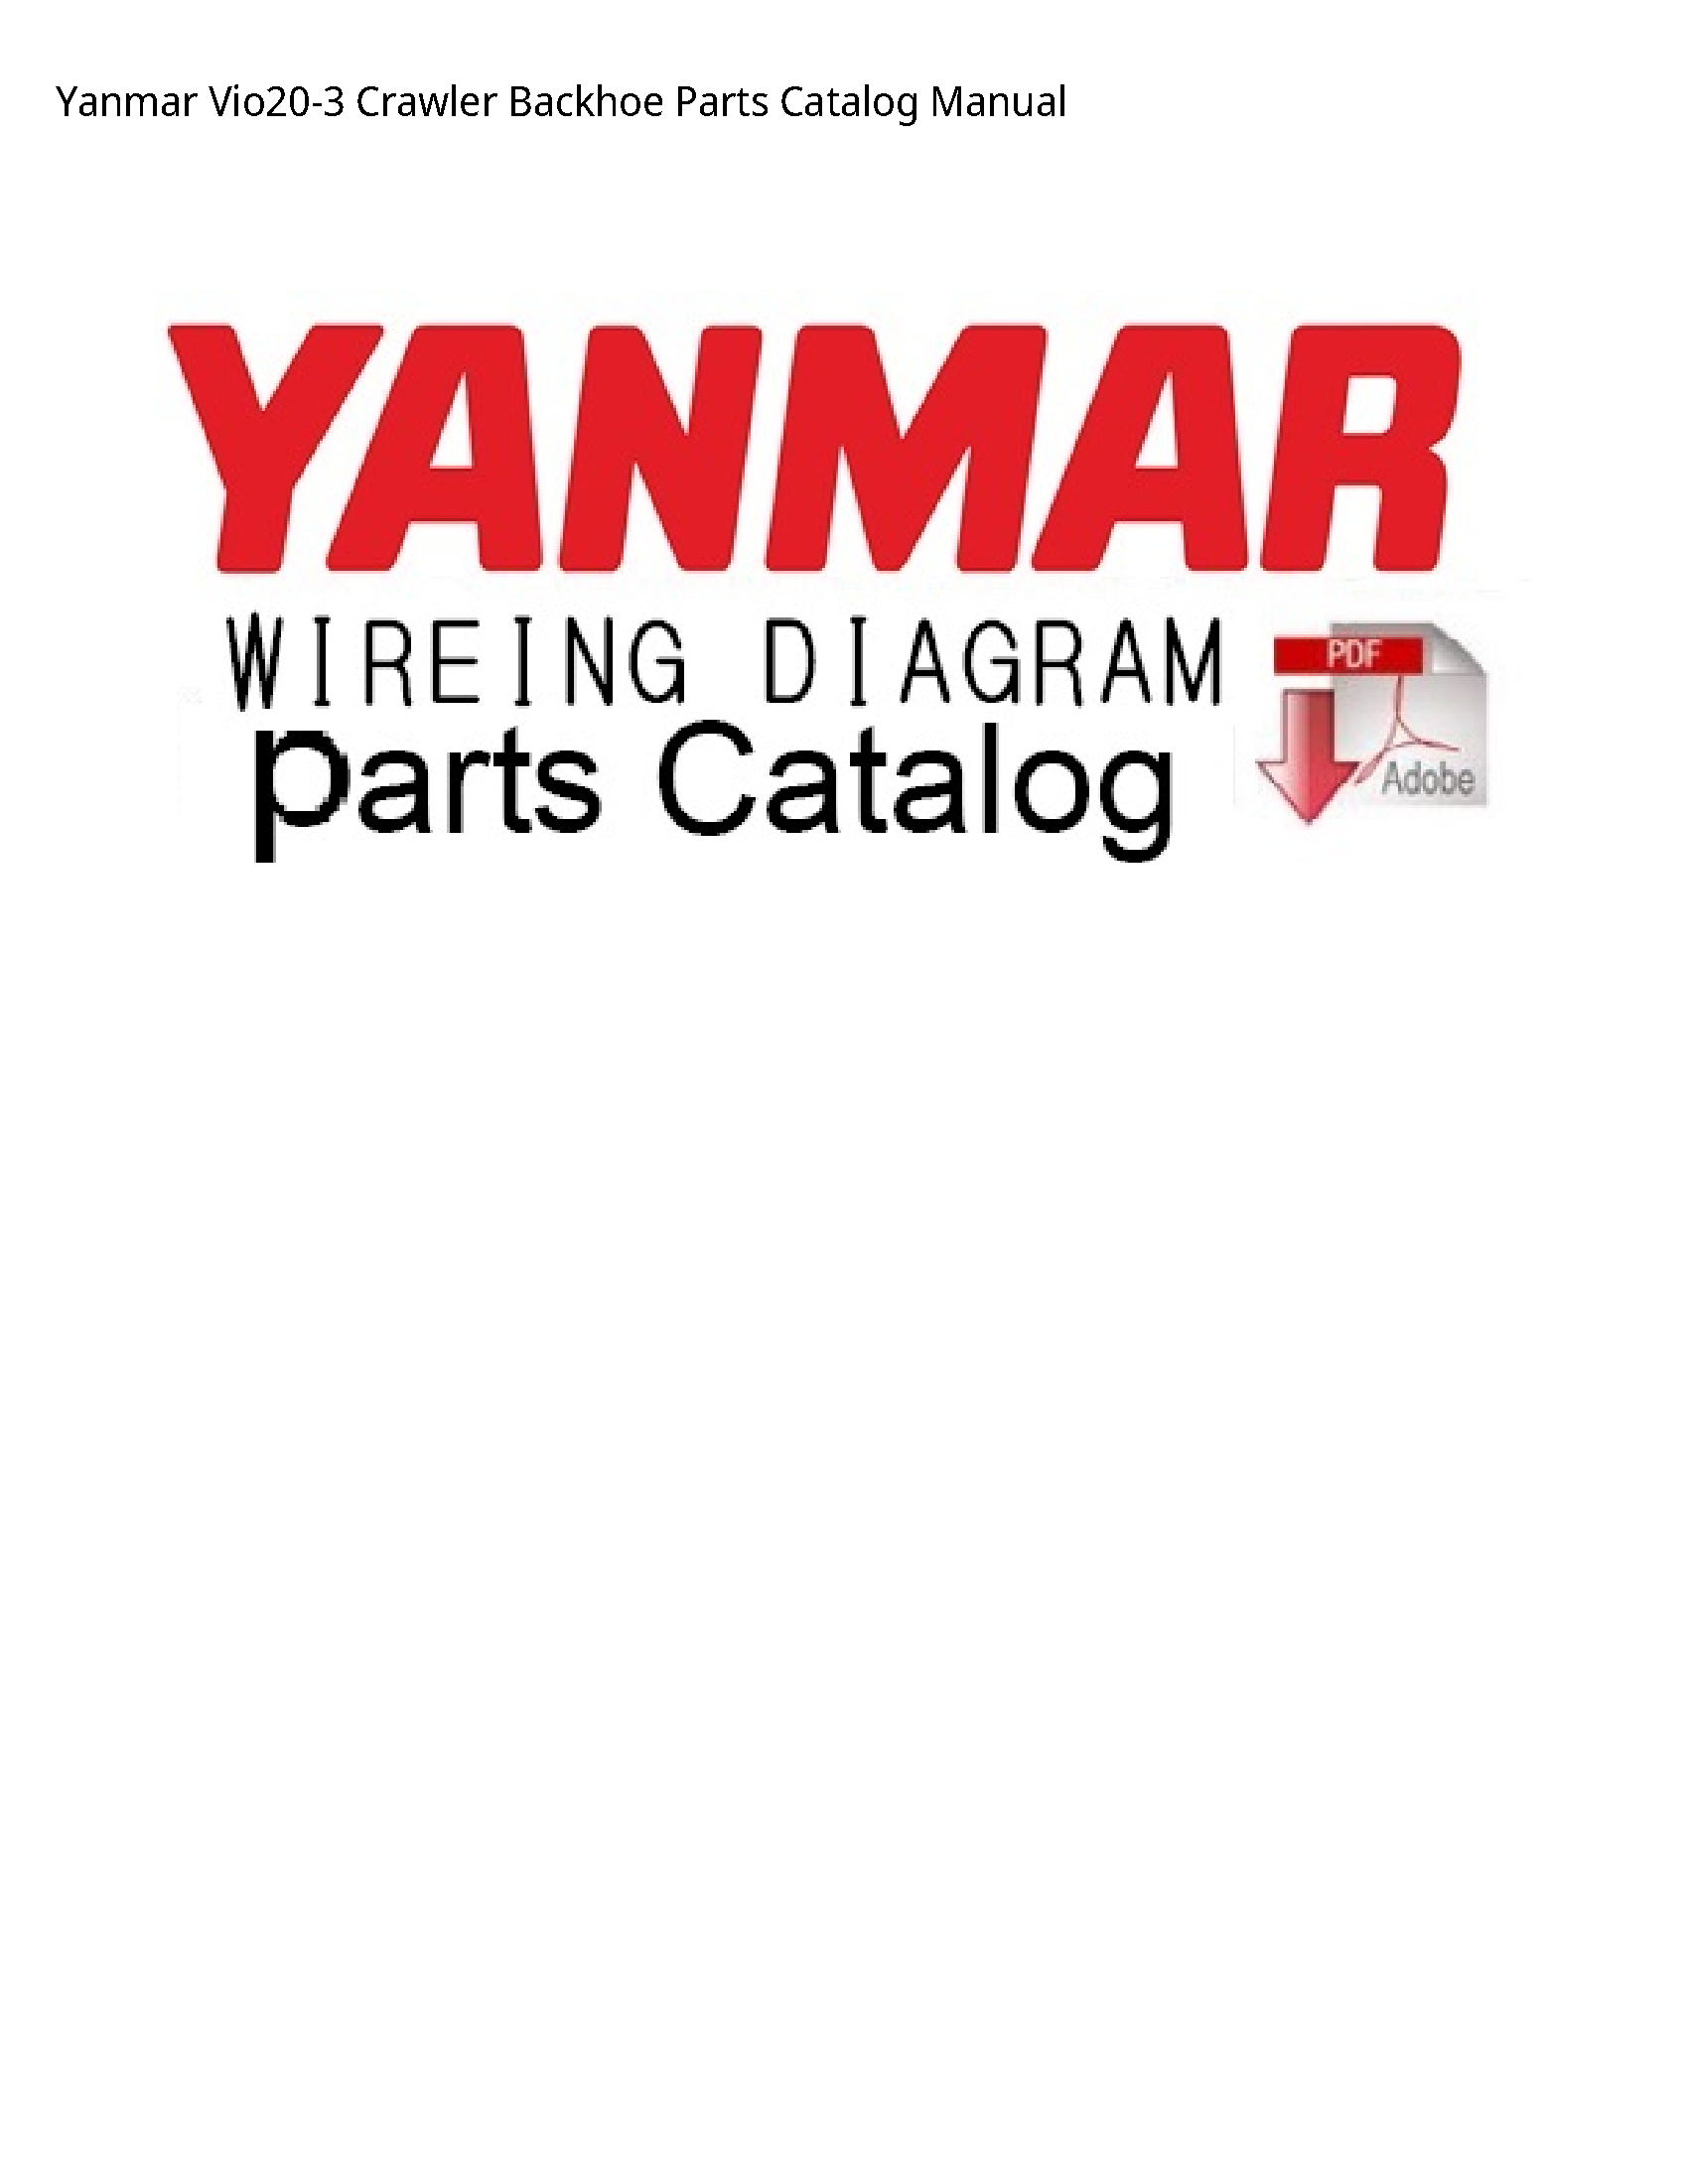 Yanmar Vio20-3 Crawler Backhoe Parts Catalog manual